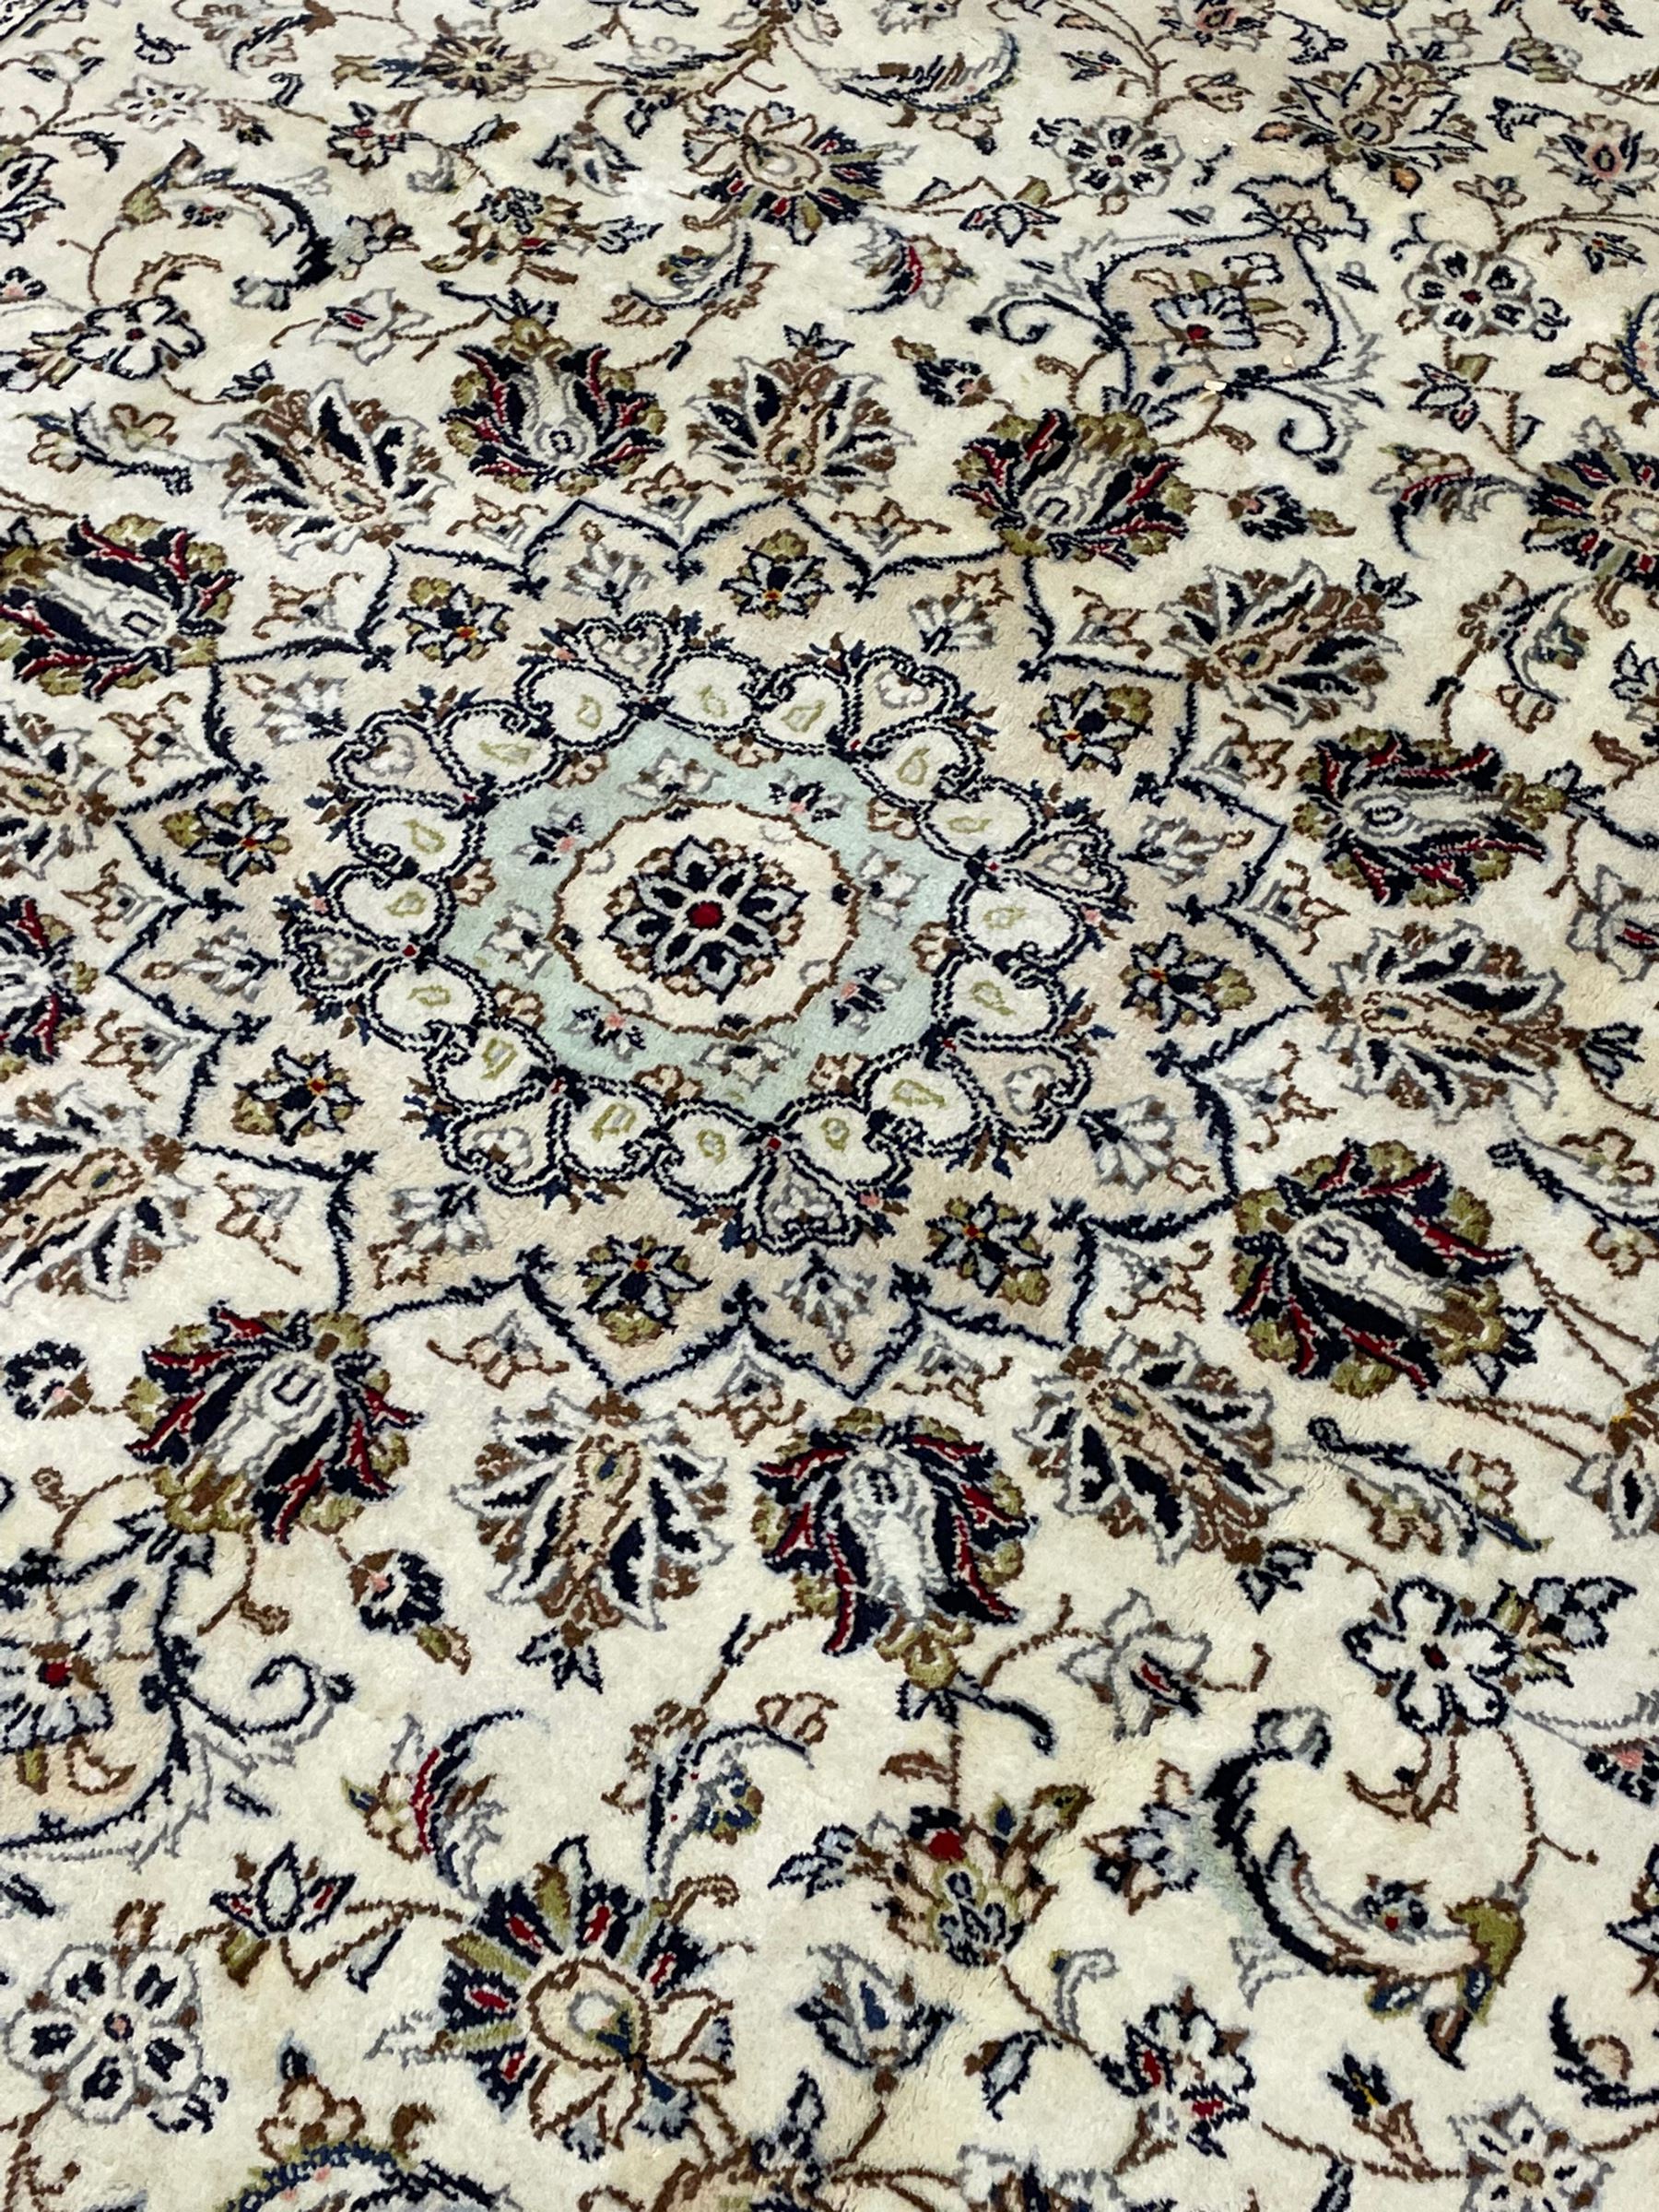 Central Persian Kashan ivory carpet - Image 4 of 7